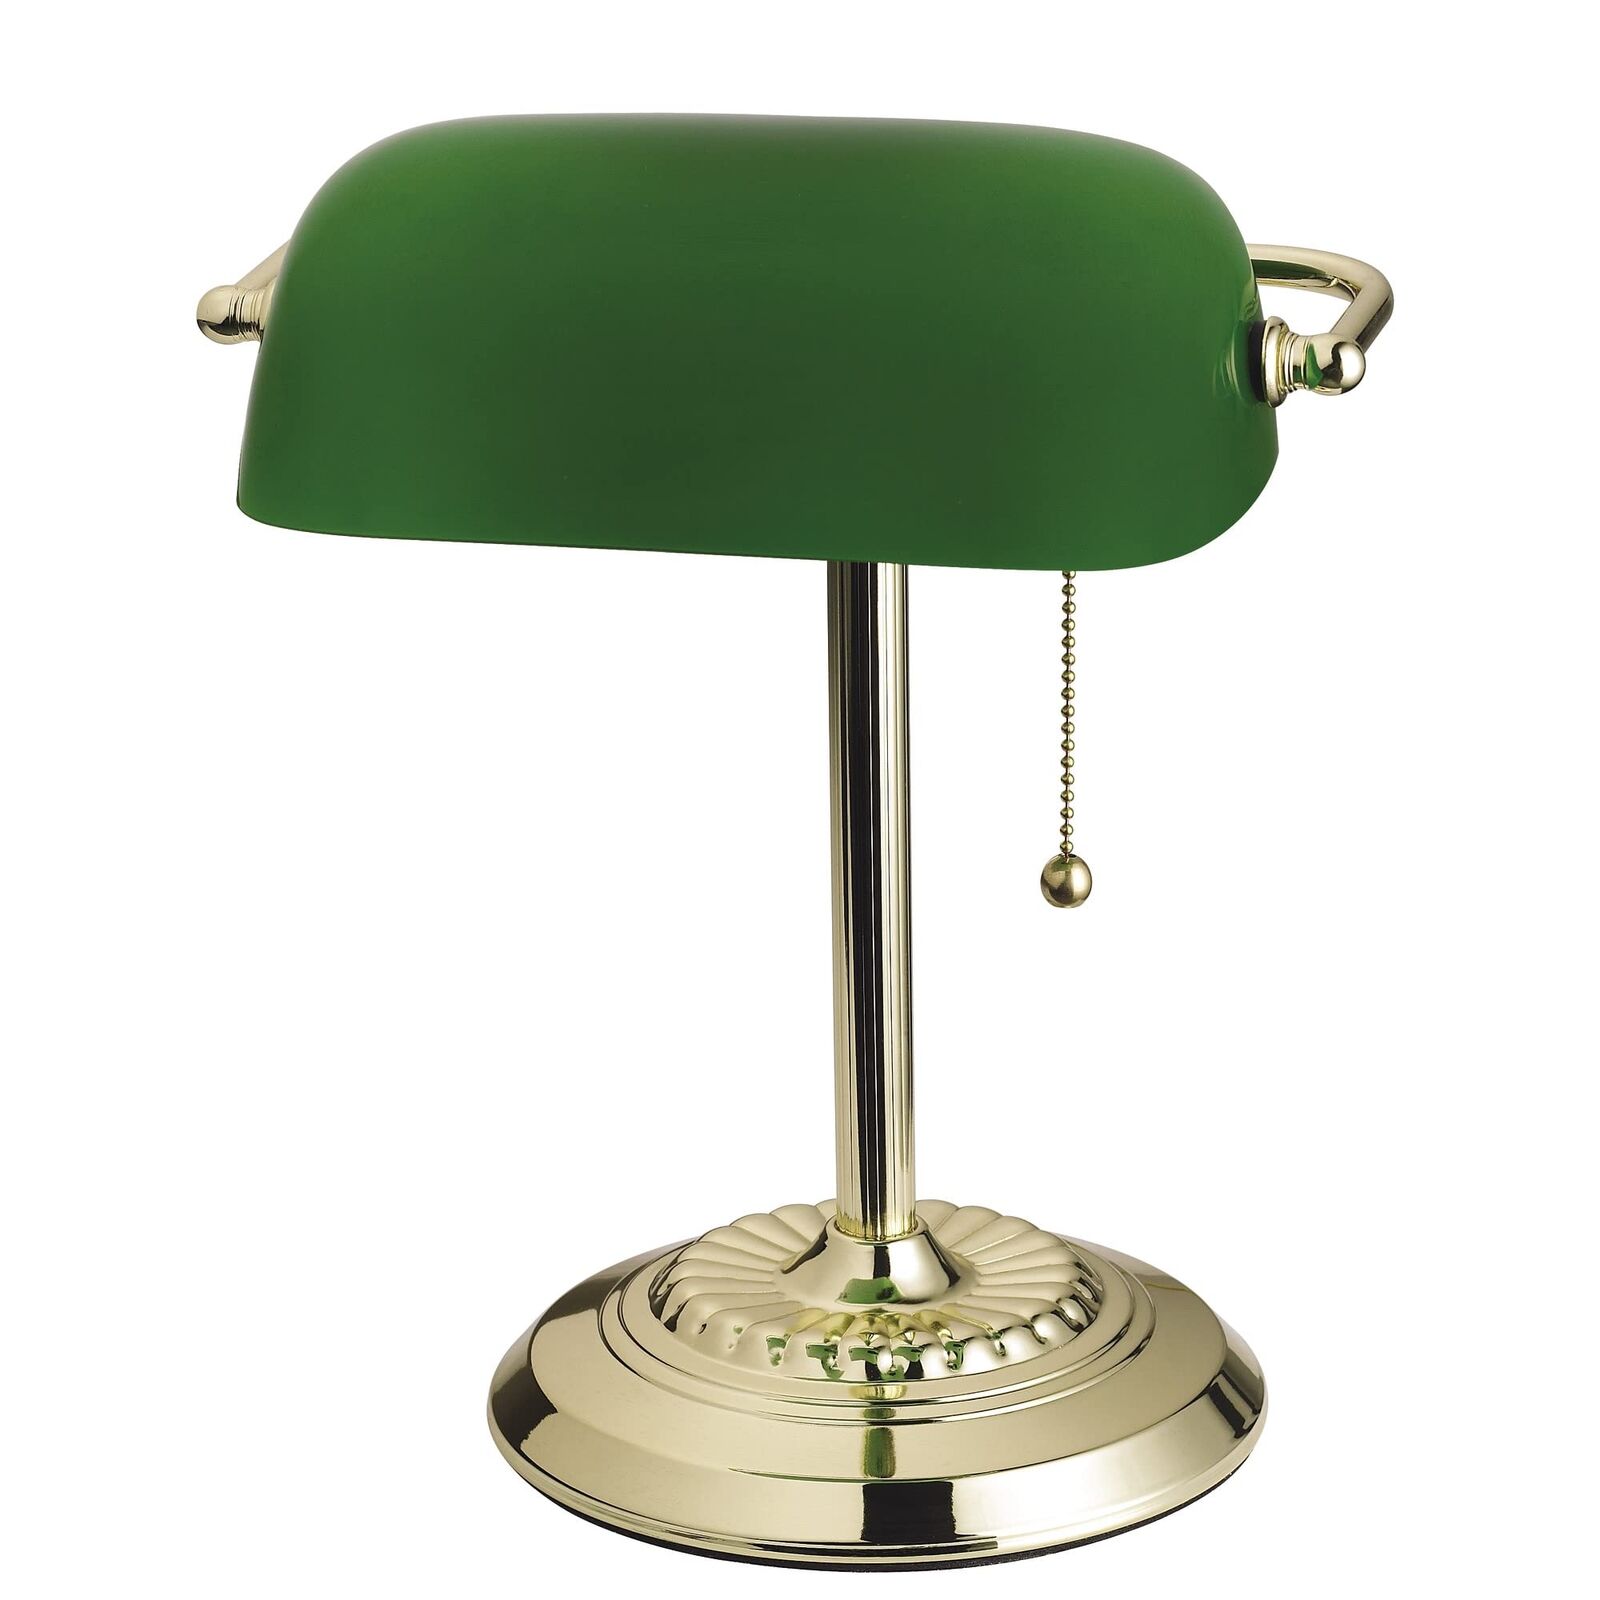 Lighting Traditional Desk Lamp, Green, Smart Home Capable for Home Office, Do...